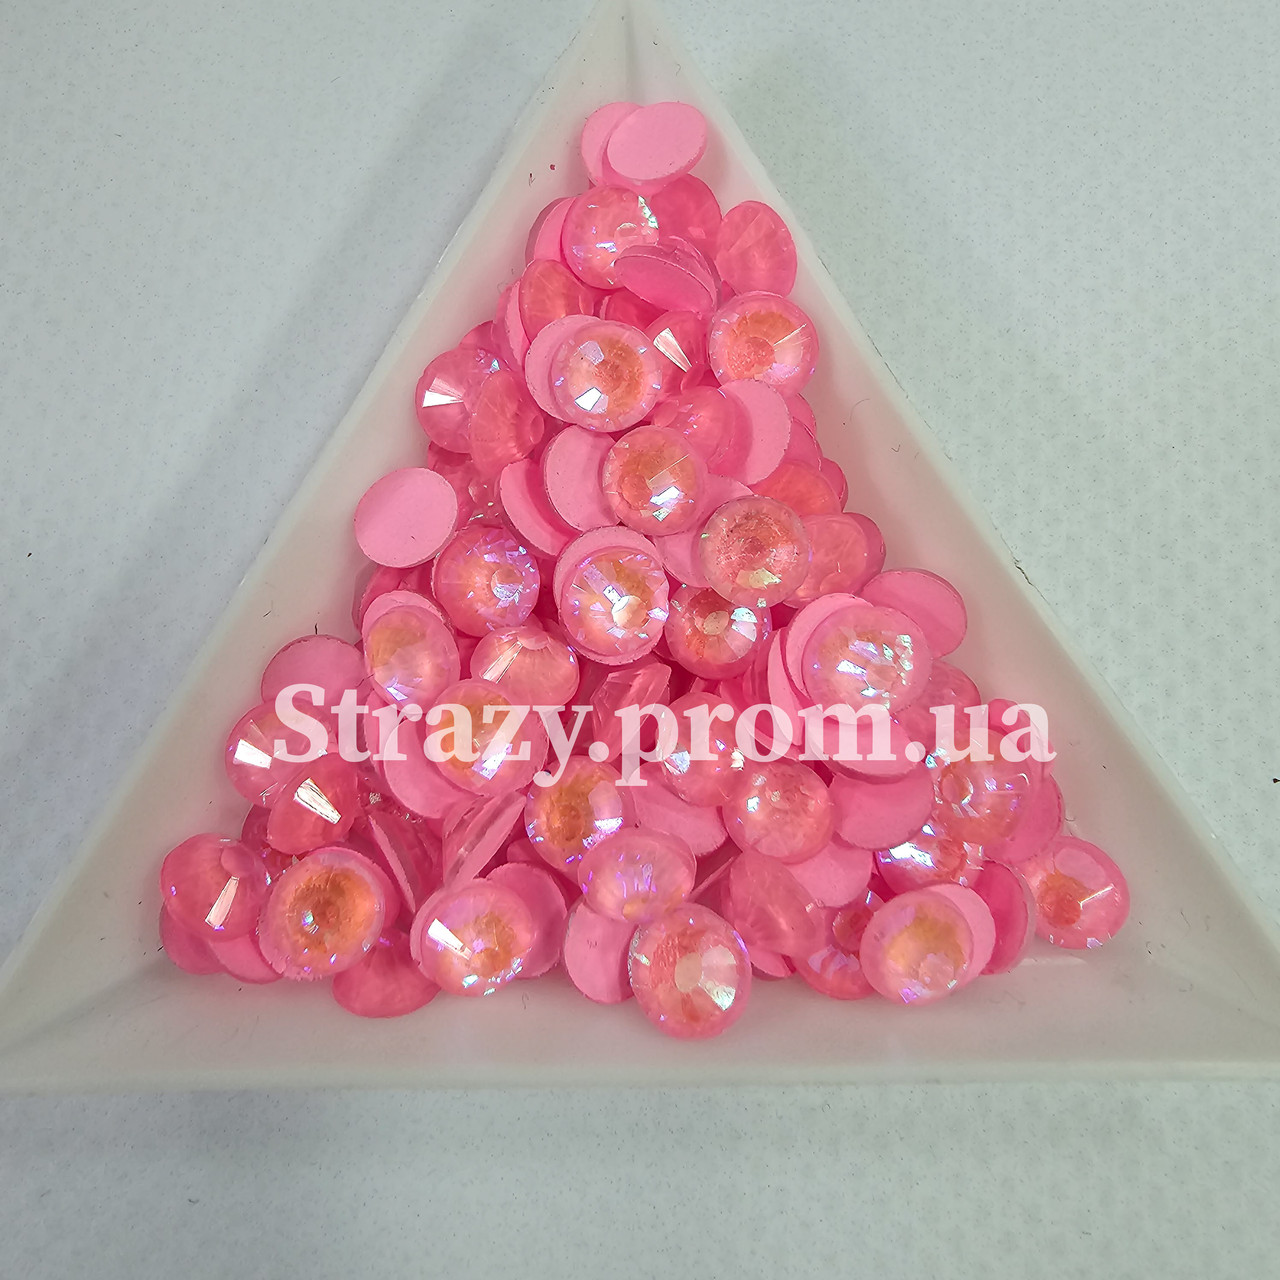 Стрази ss20 Crystal Electric Pink DeLite 1440шт, (5.0 мм)